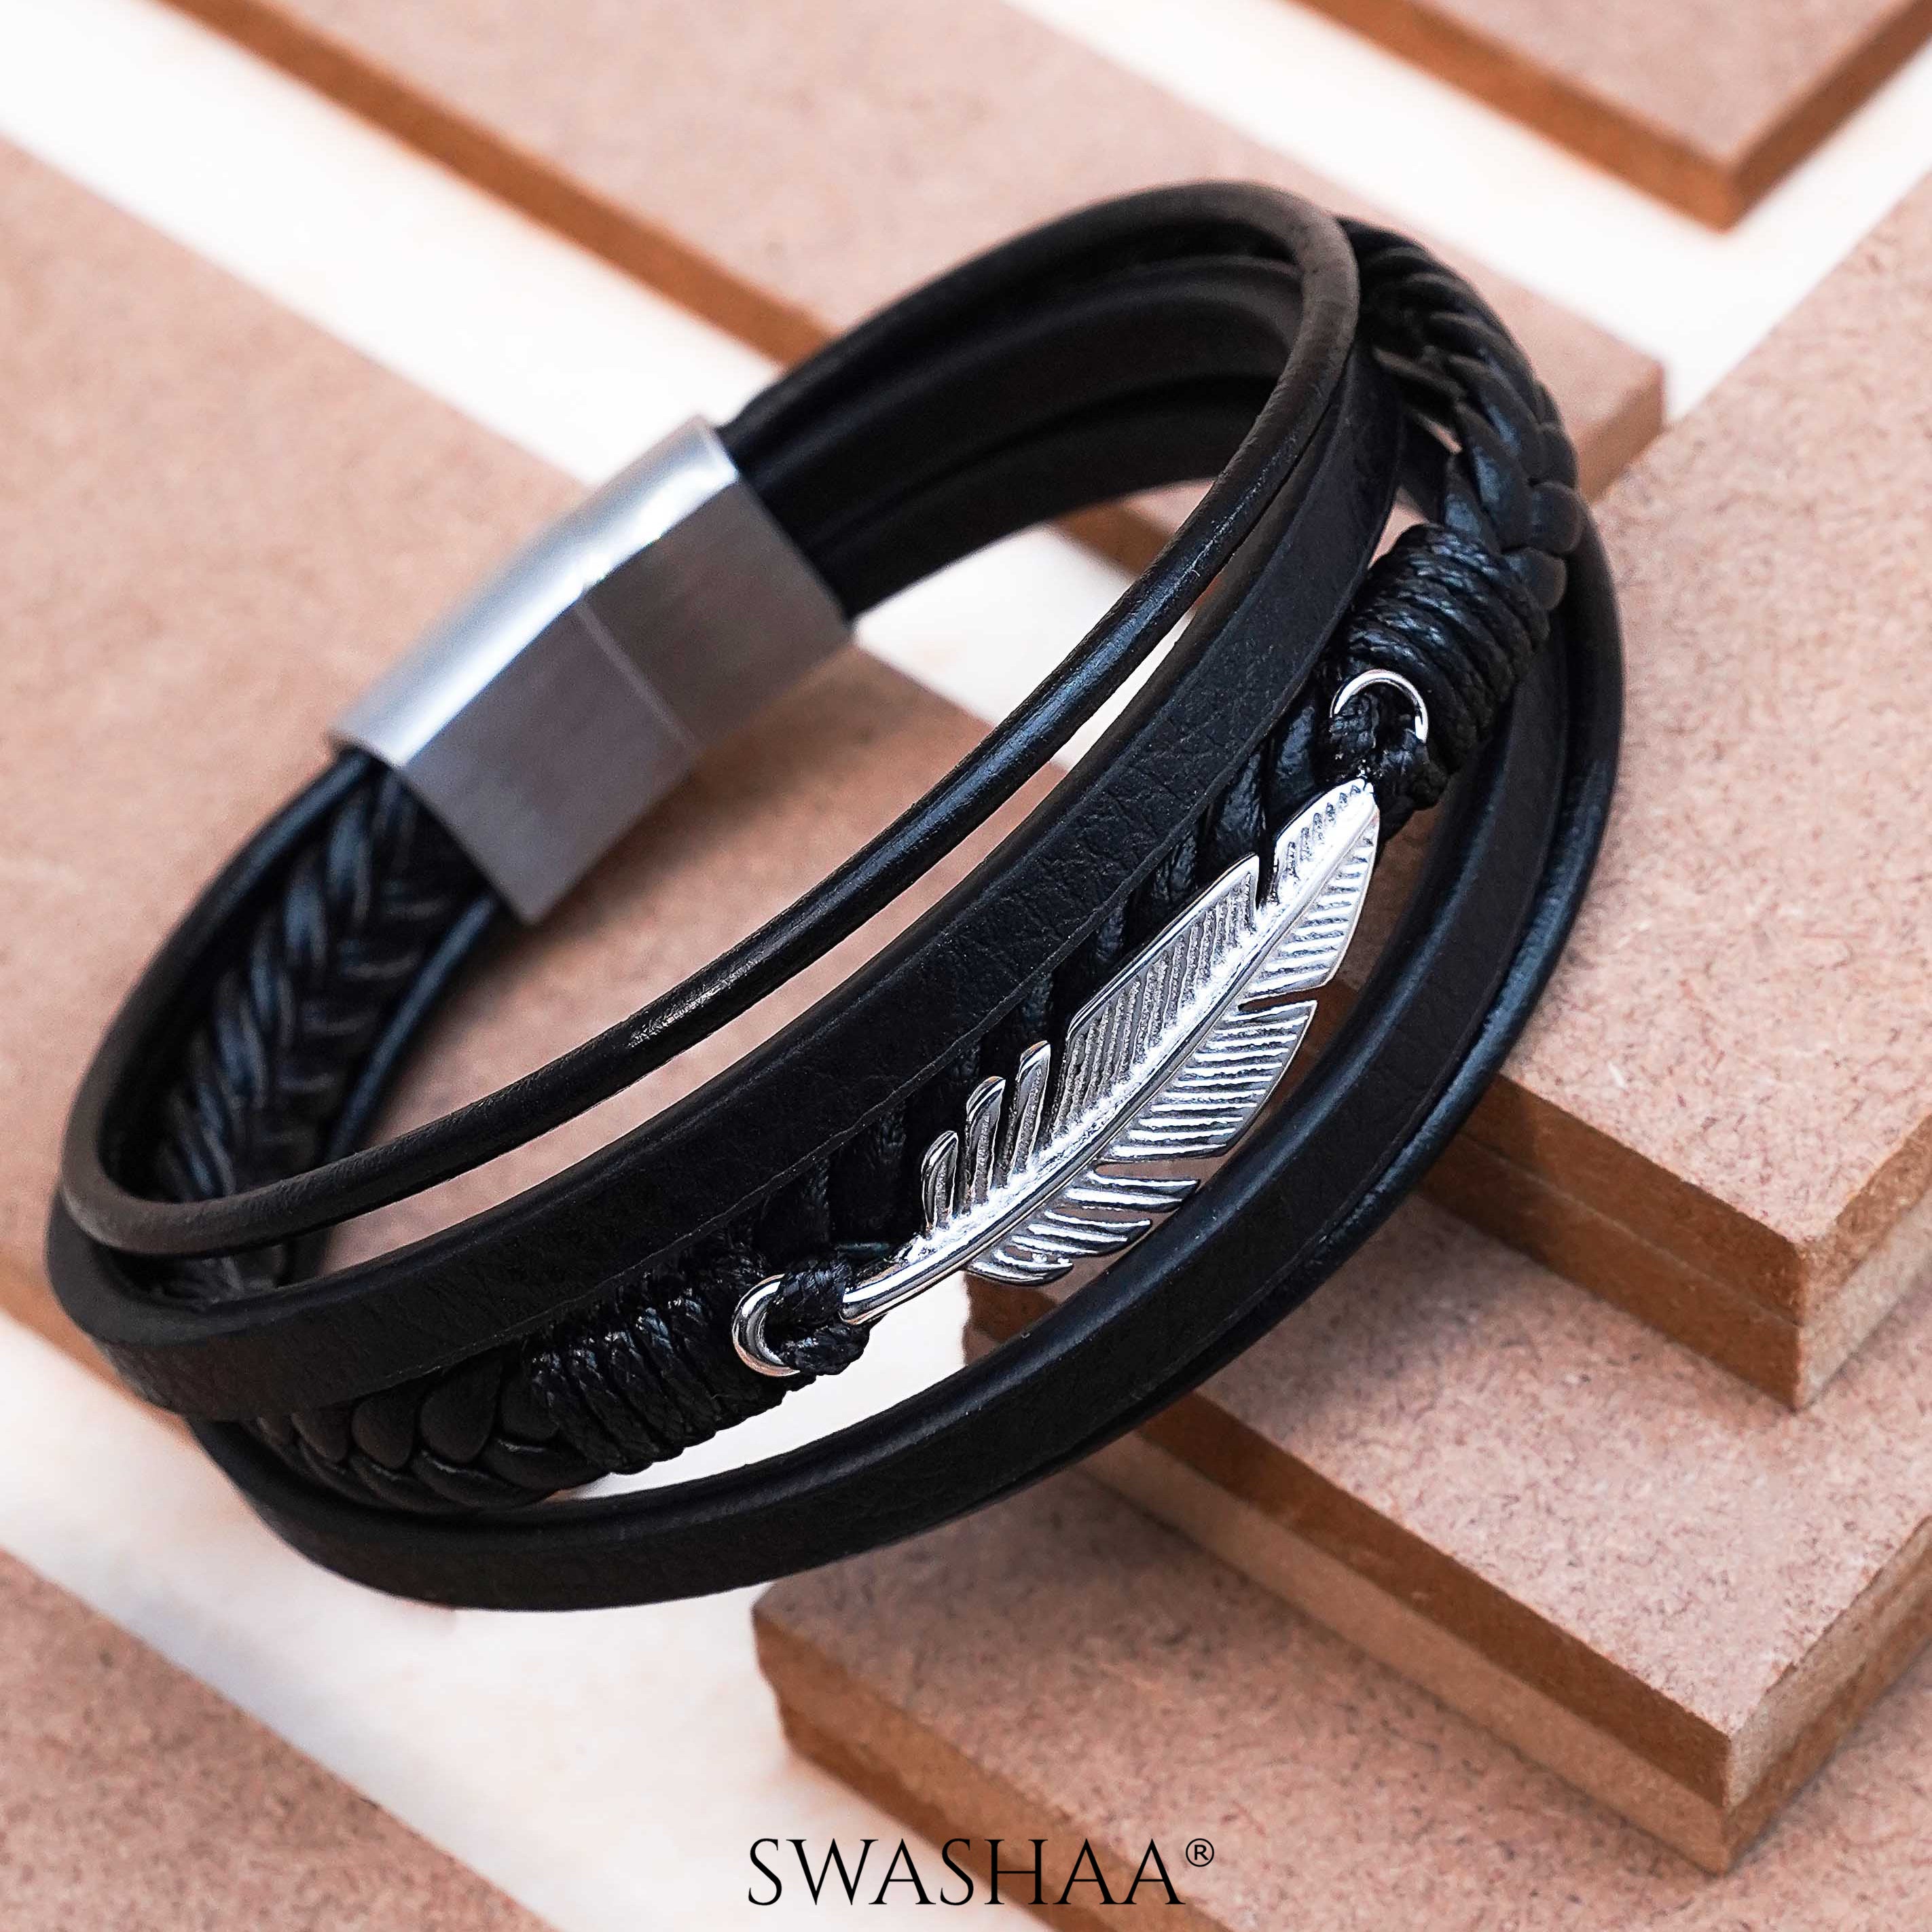 Buy Black Bracelets & Kadas for Men by Fashion Frill Online | Ajio.com